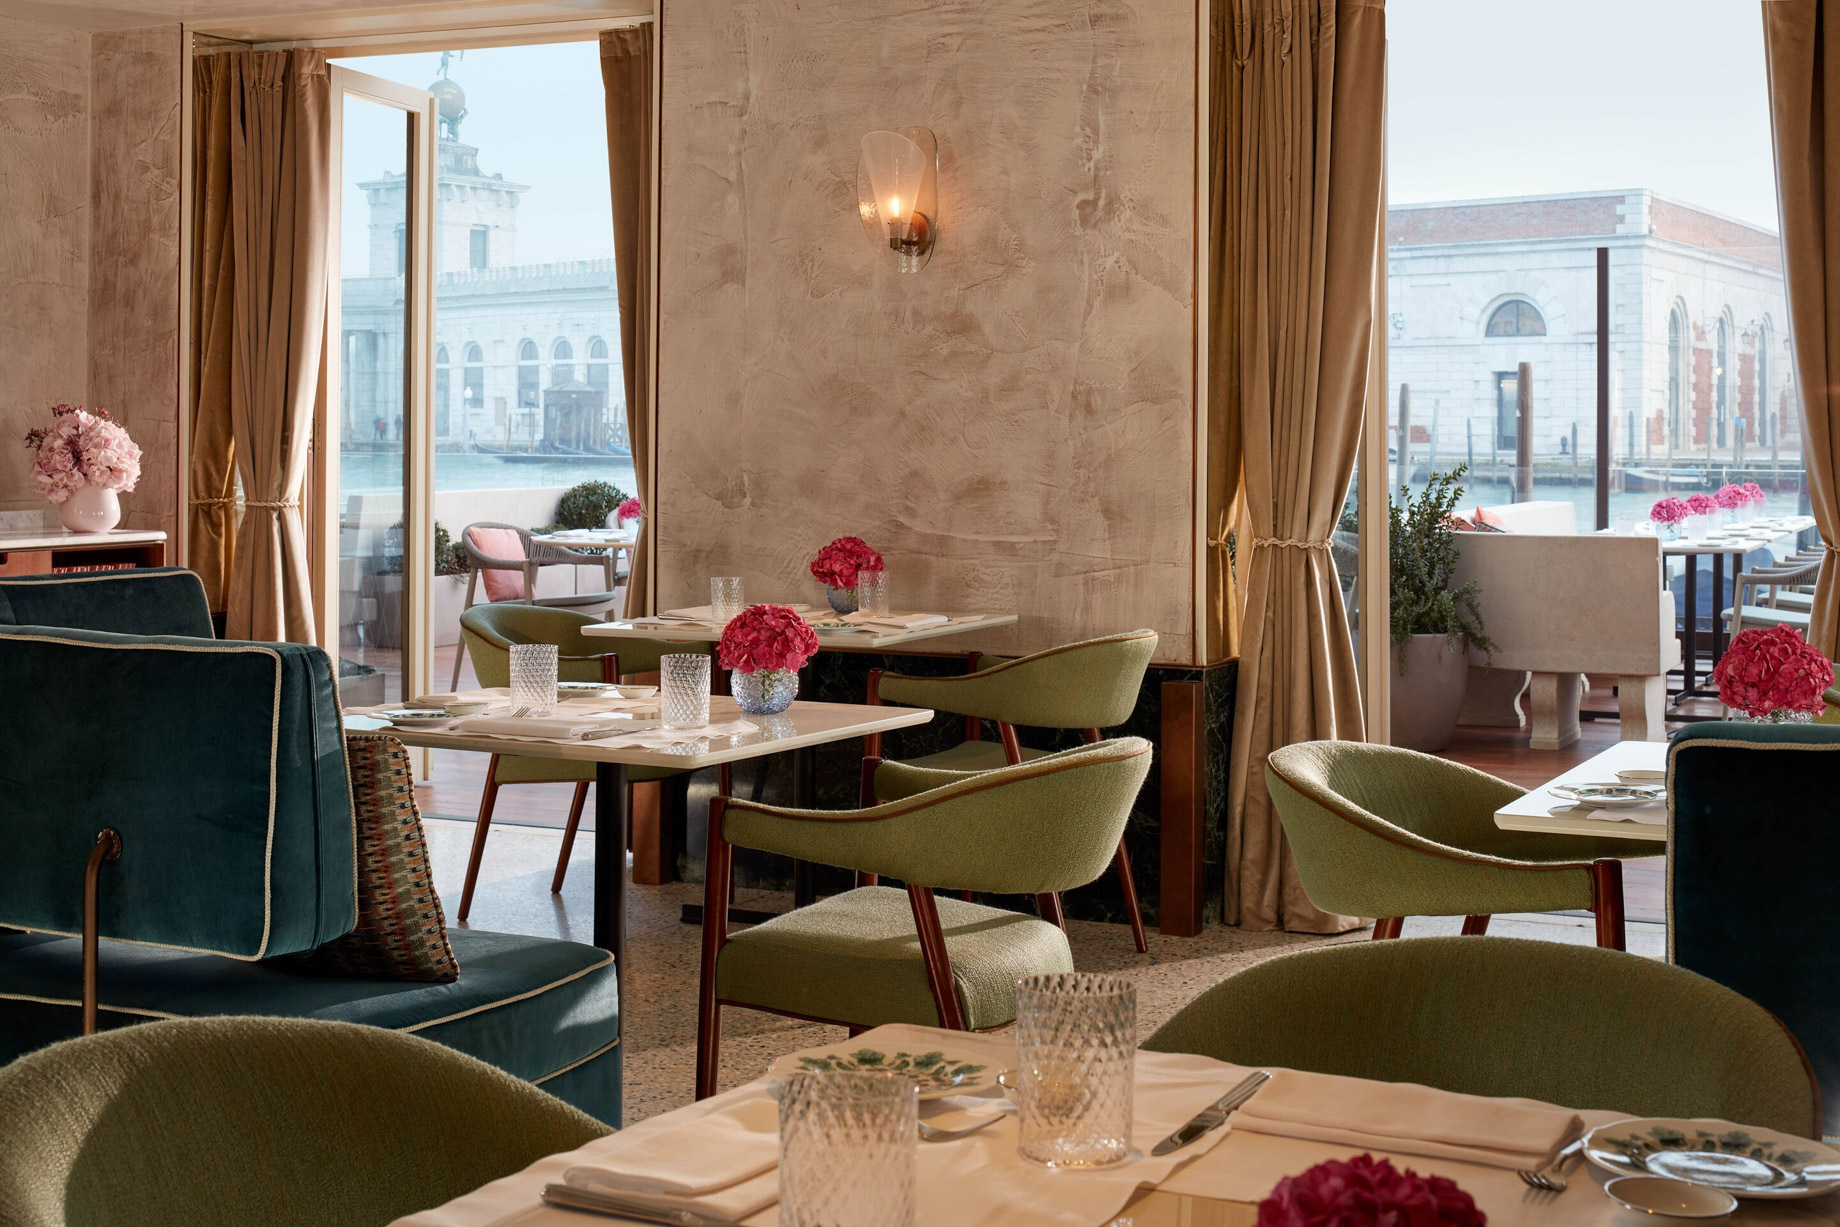 The St. Regis Venice Hotel – Venice, Italy – Gio’s Restaurant & Garden Seating